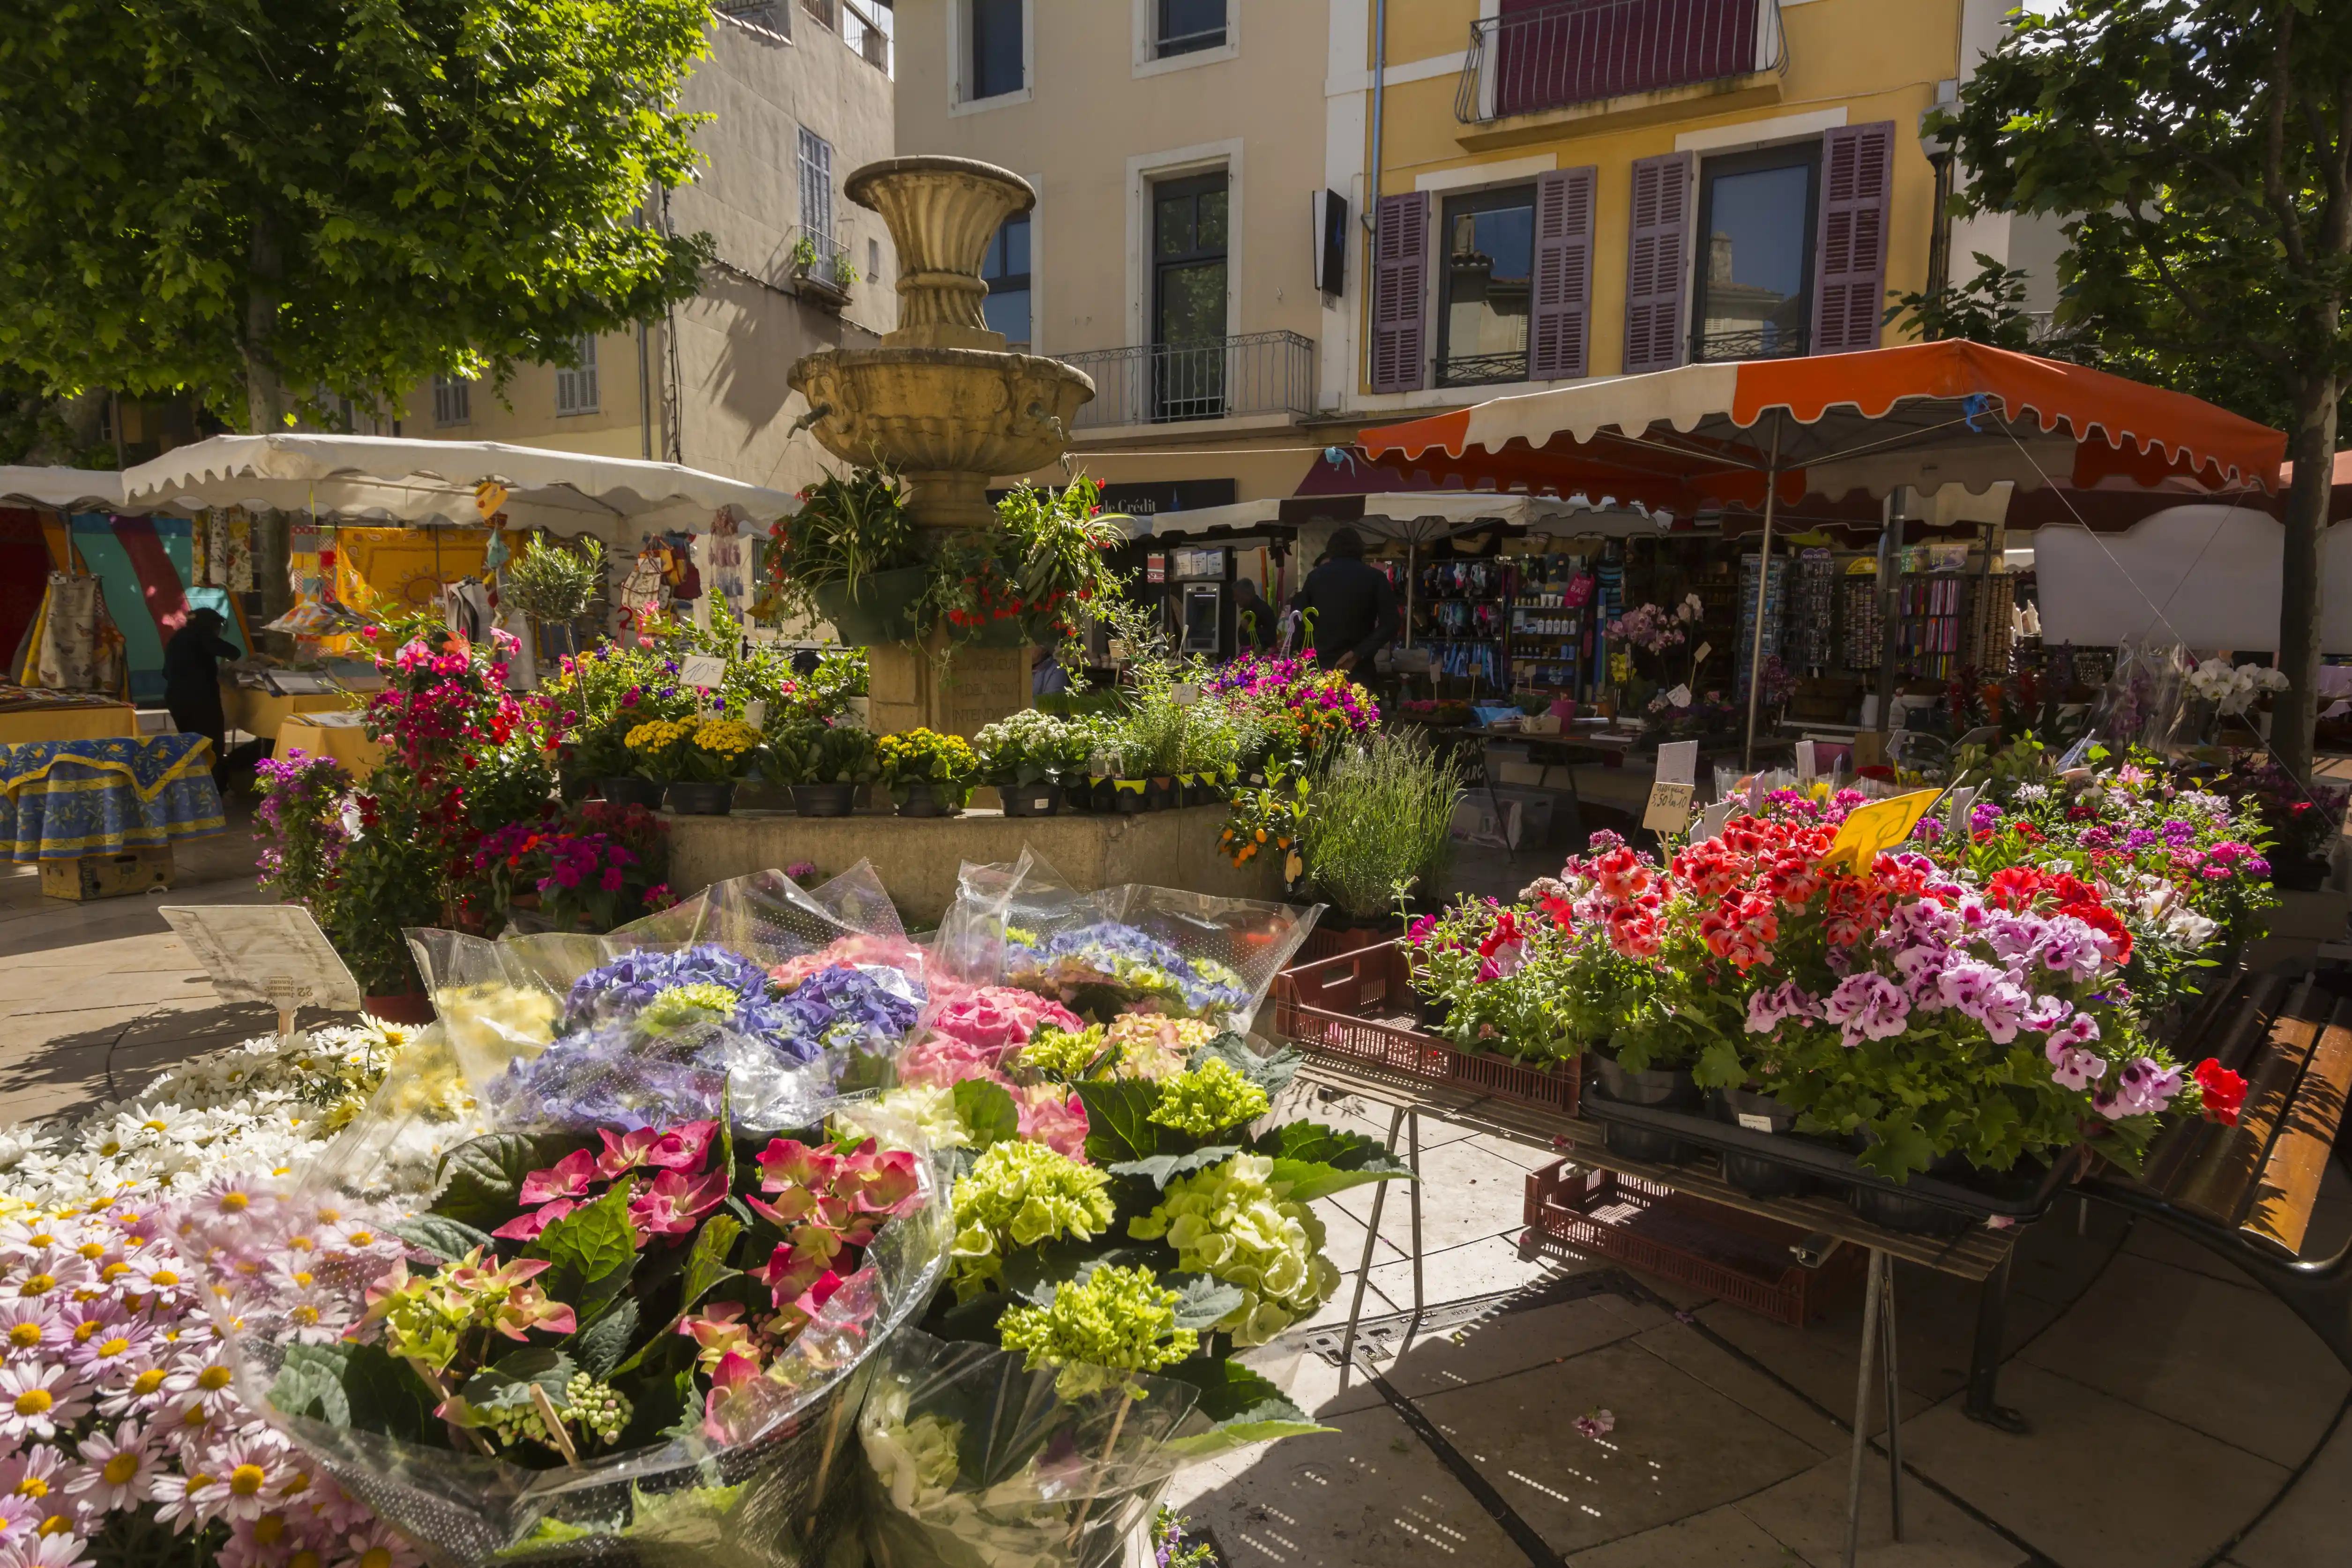 Flower vendors in Cassis France maket.
